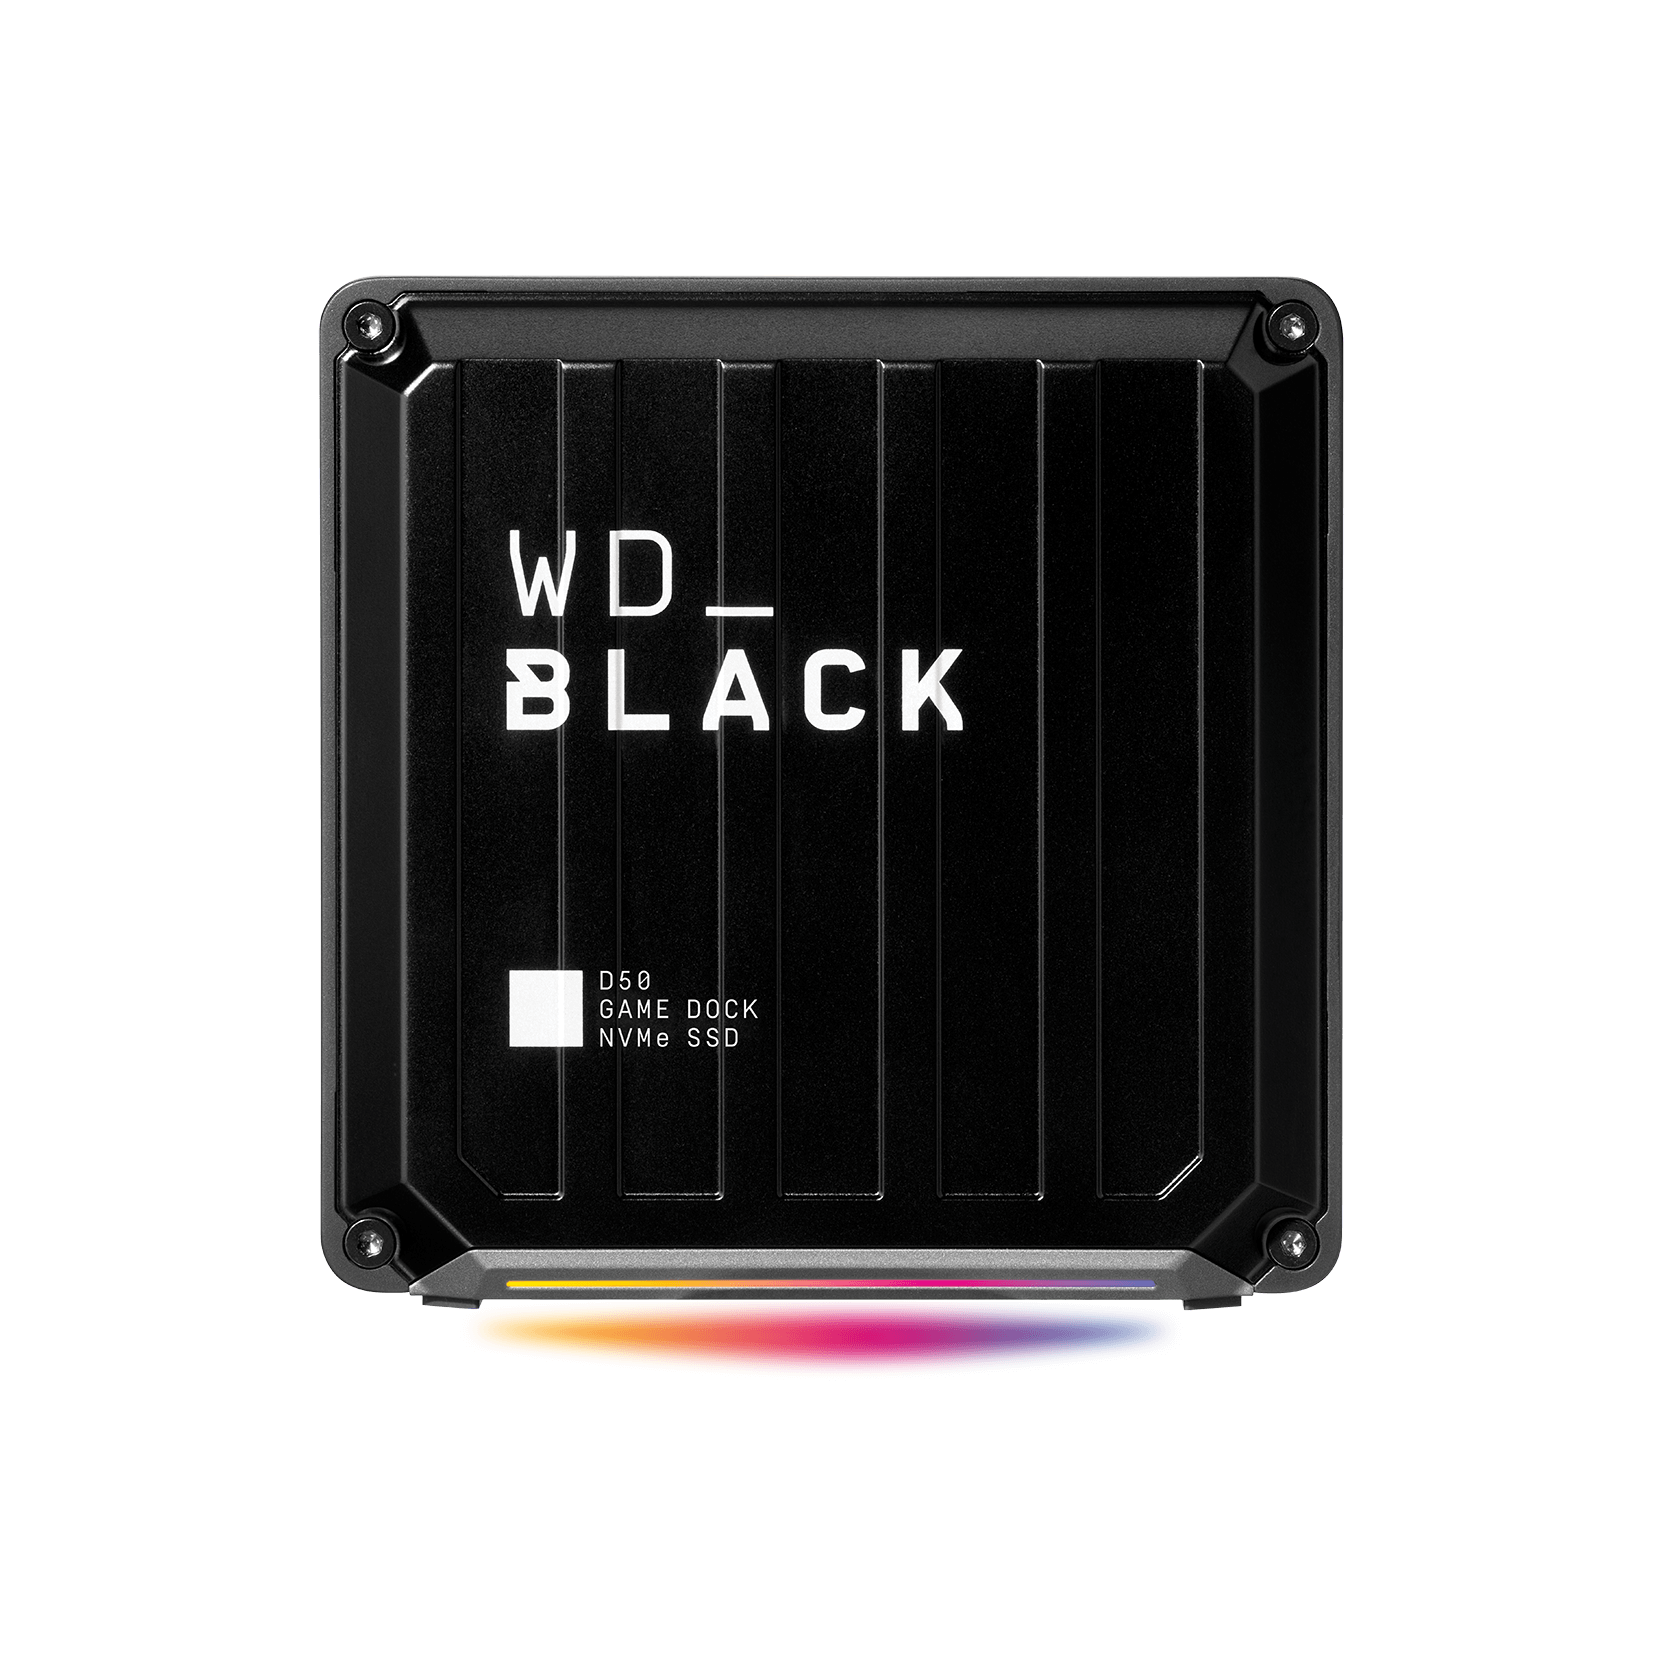 WD_BLACK D50 Game Dock NVMe SSD - 1TB